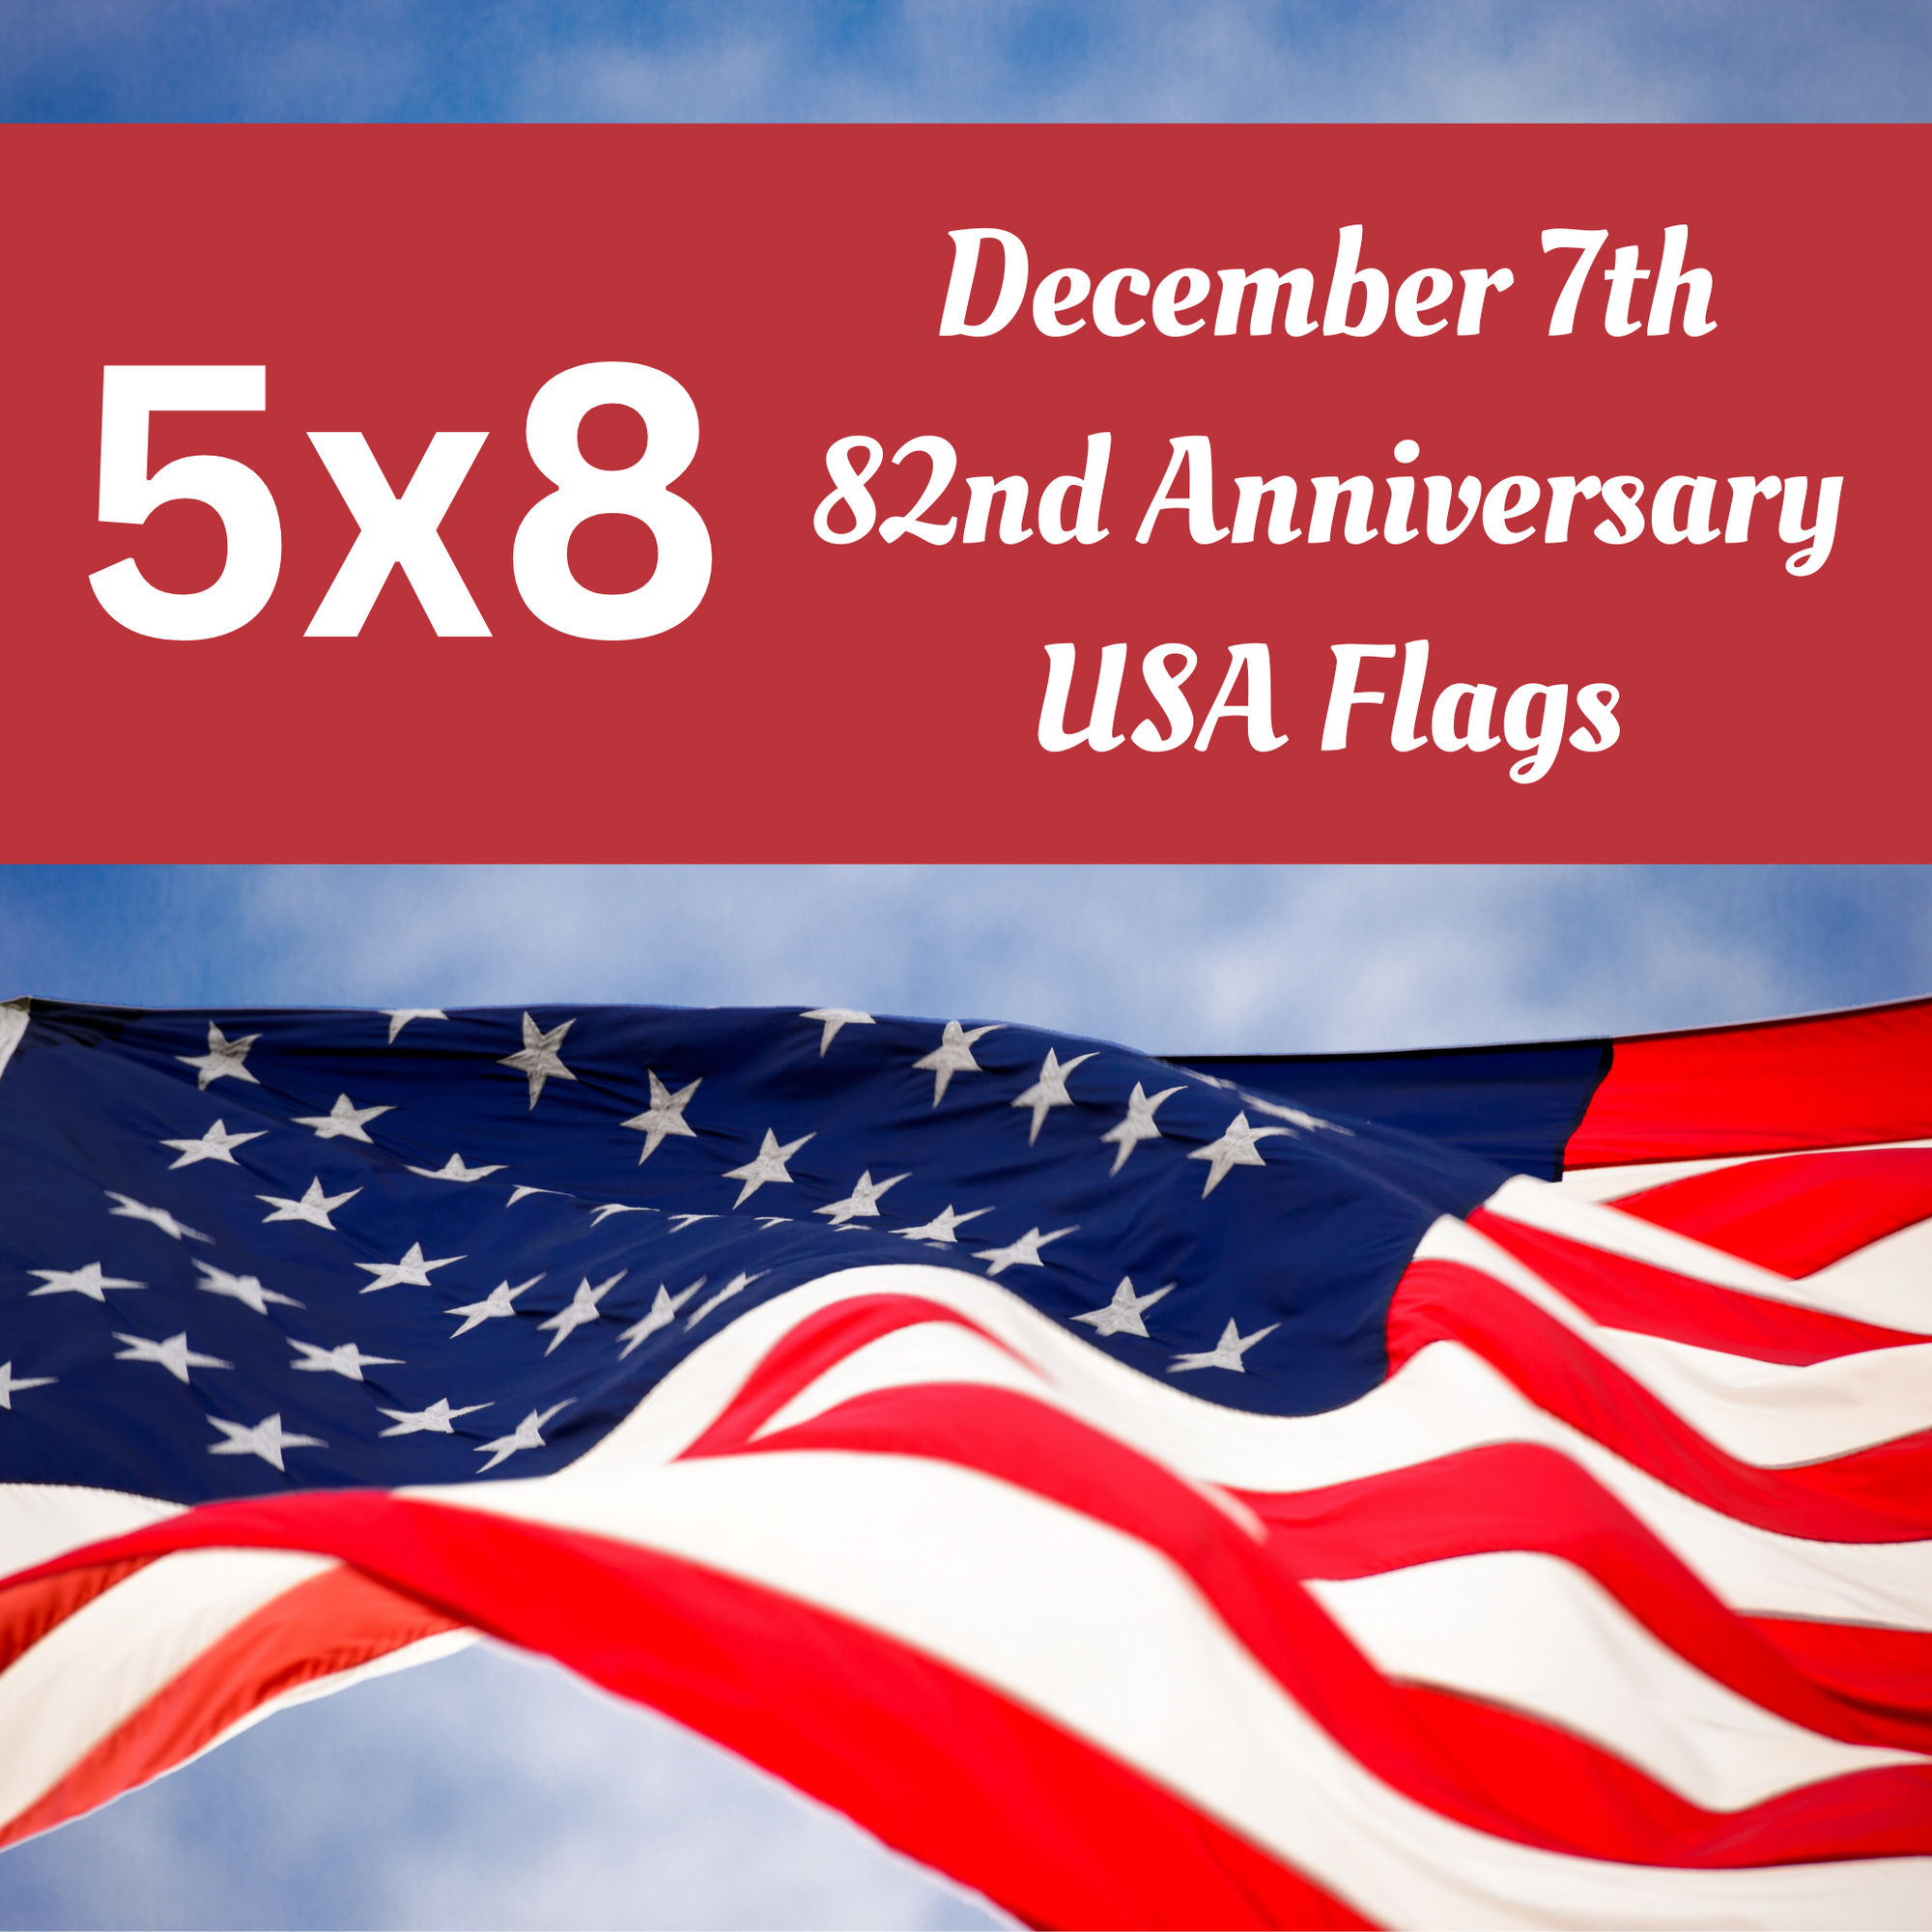 5x8 December 7th USA Flag Flown On USS Arizona Memorial At Pearl Harbor